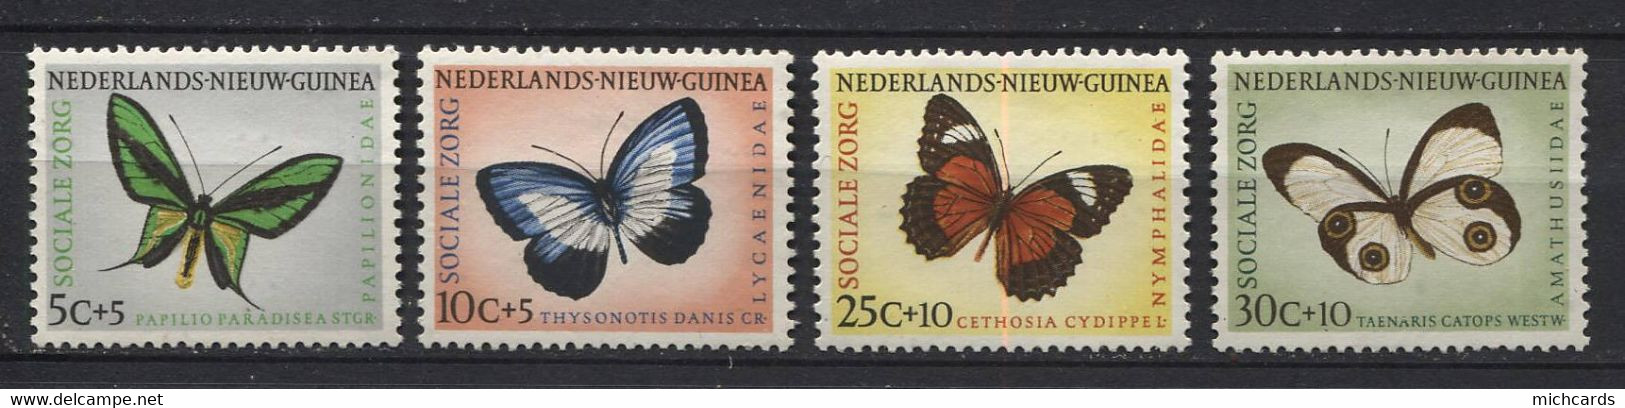 180 NOUVELLE GUINEE NEERLANDAISE 1960 - Y&T 58/61 - Papillon - Oiseau - Neuf ** (MNH) Sans Charniere - Netherlands New Guinea